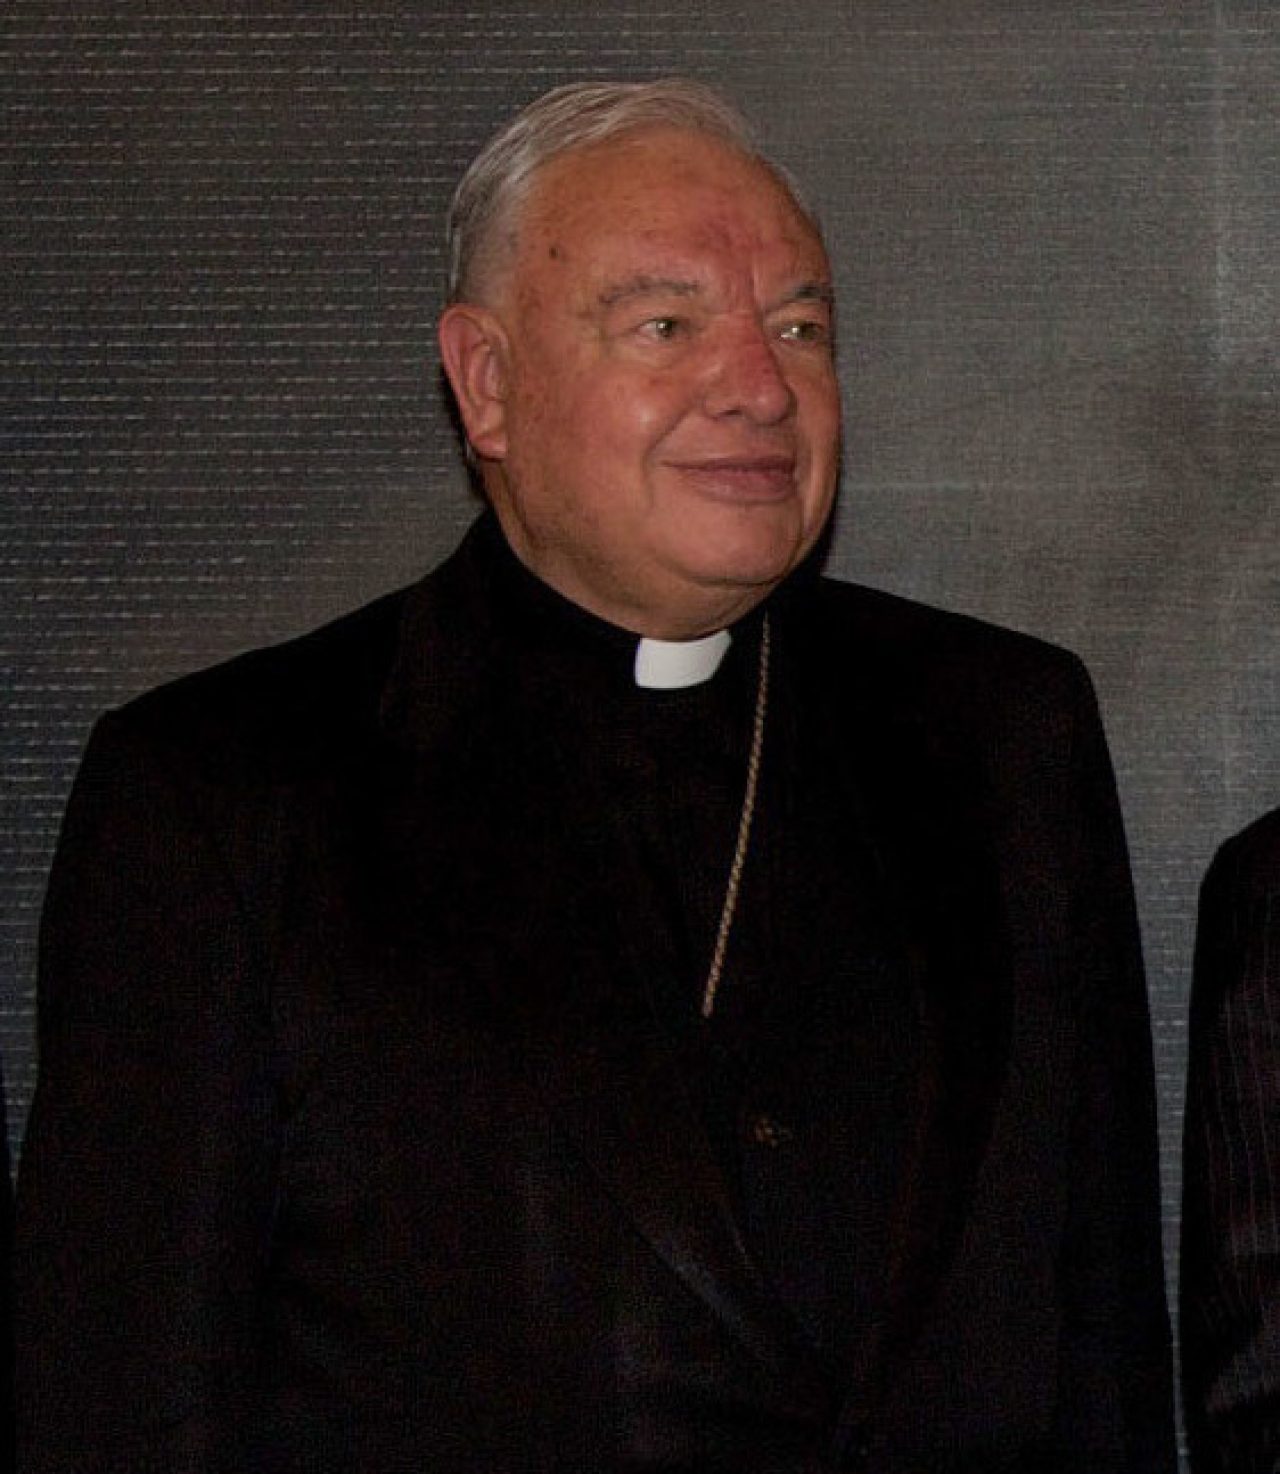 Kardinal Juan Sandoval Íñiguez/Foto: Presidencia de la República Mexicana/Wikimedia Commons, CC BY 2.0